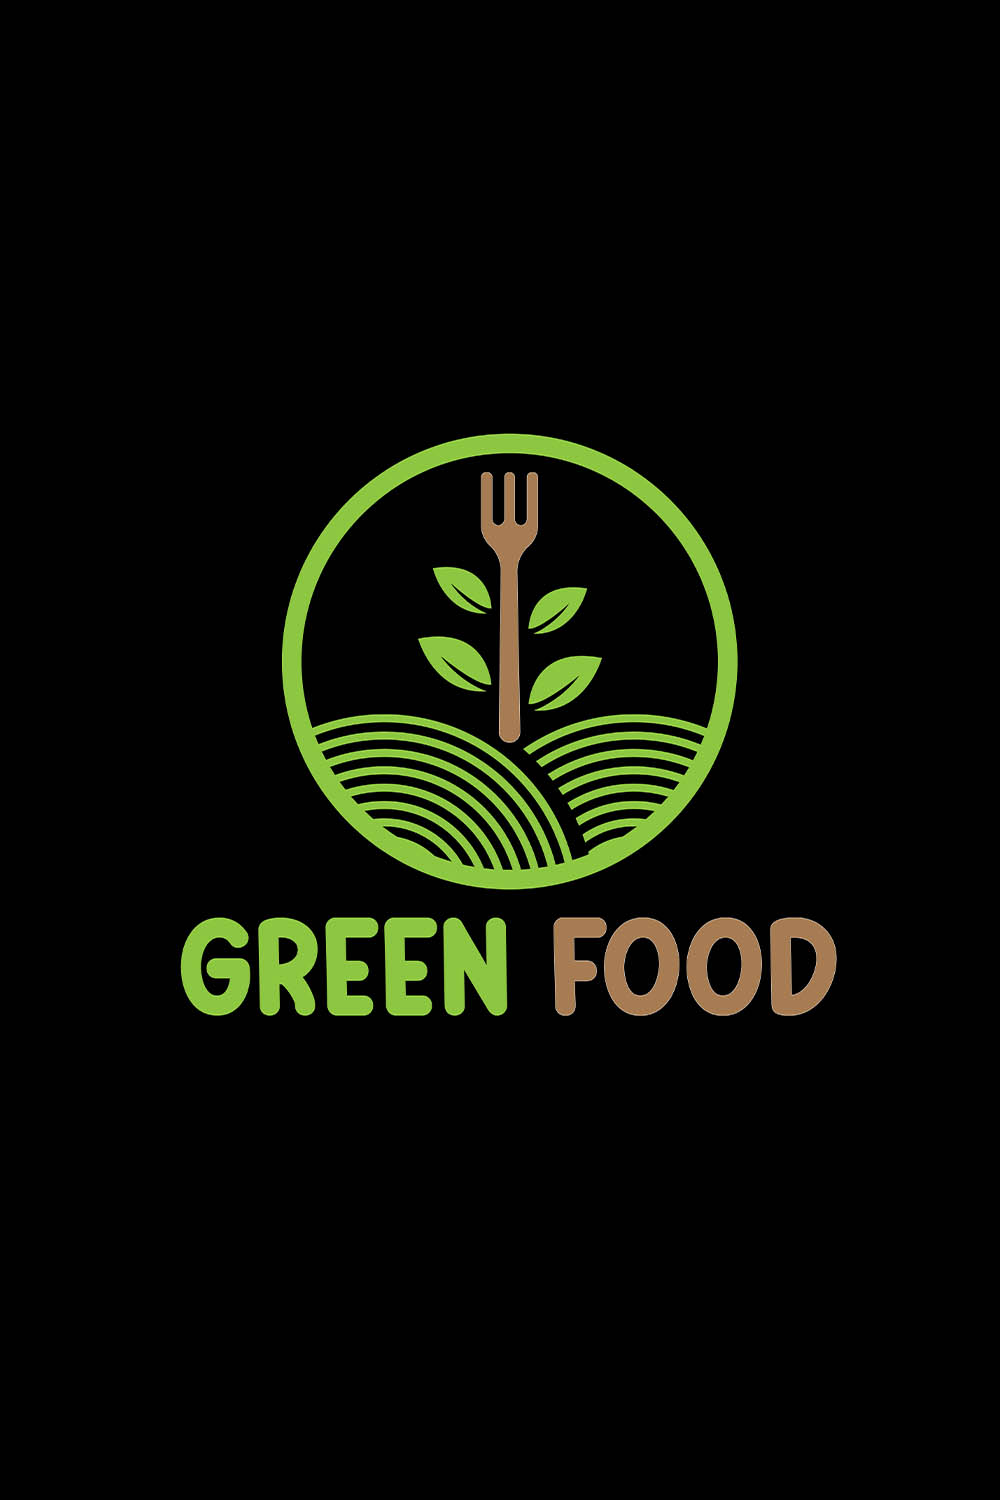 Premium Green Food Logo Design Kit - 100% Editable Vector Templates pinterest preview image.